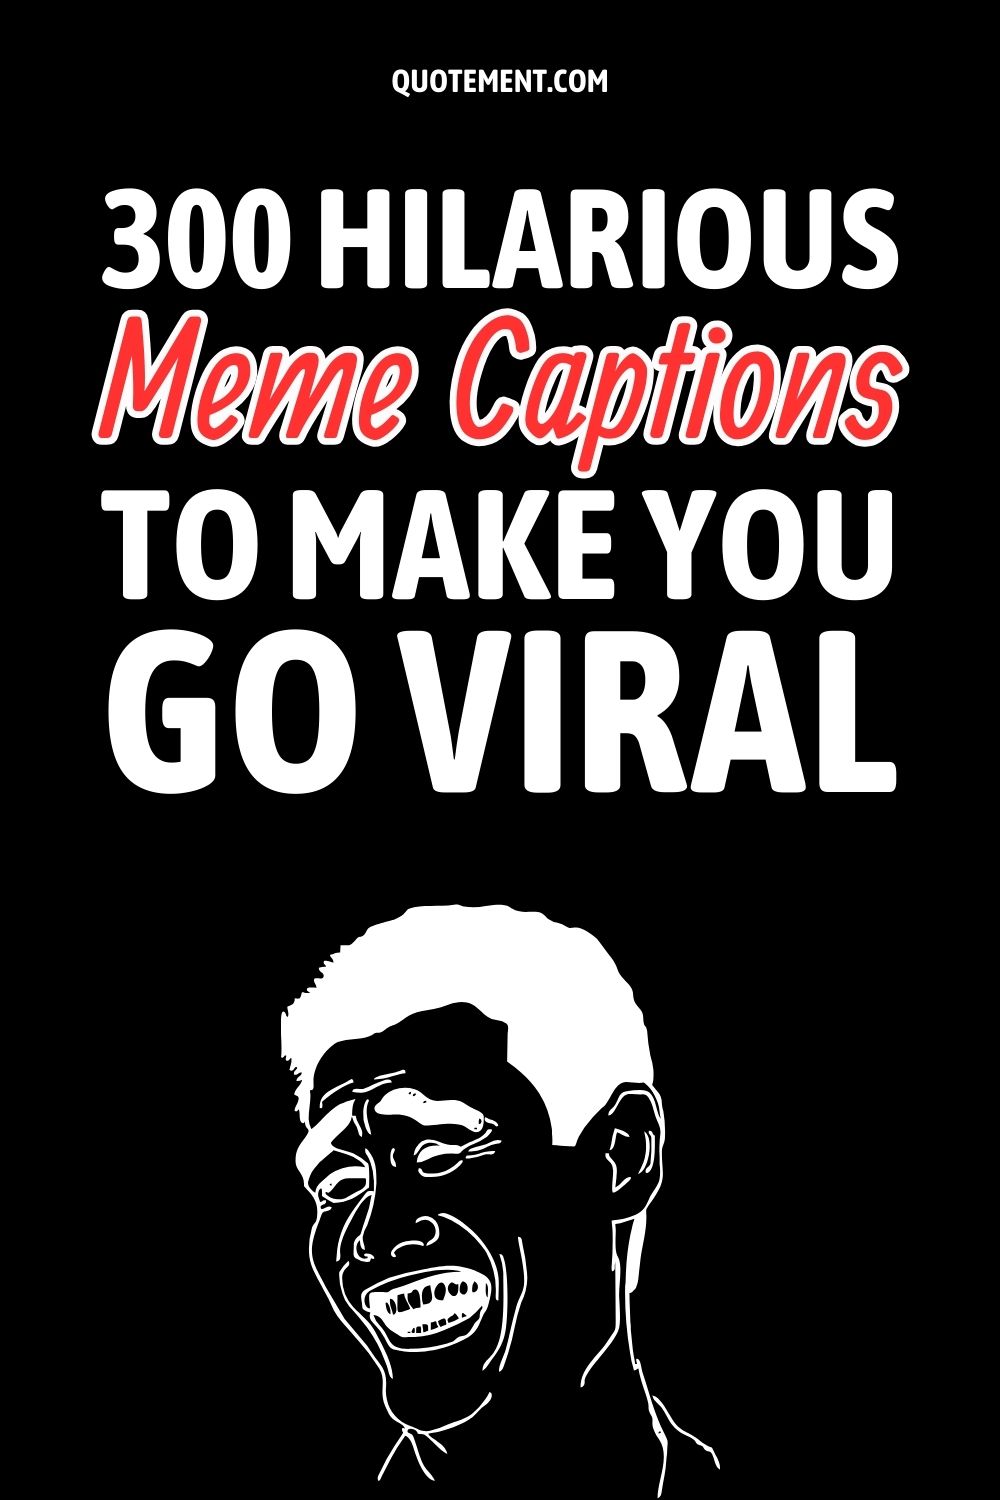 300 Hilarious Meme Captions To Make You Go Viral